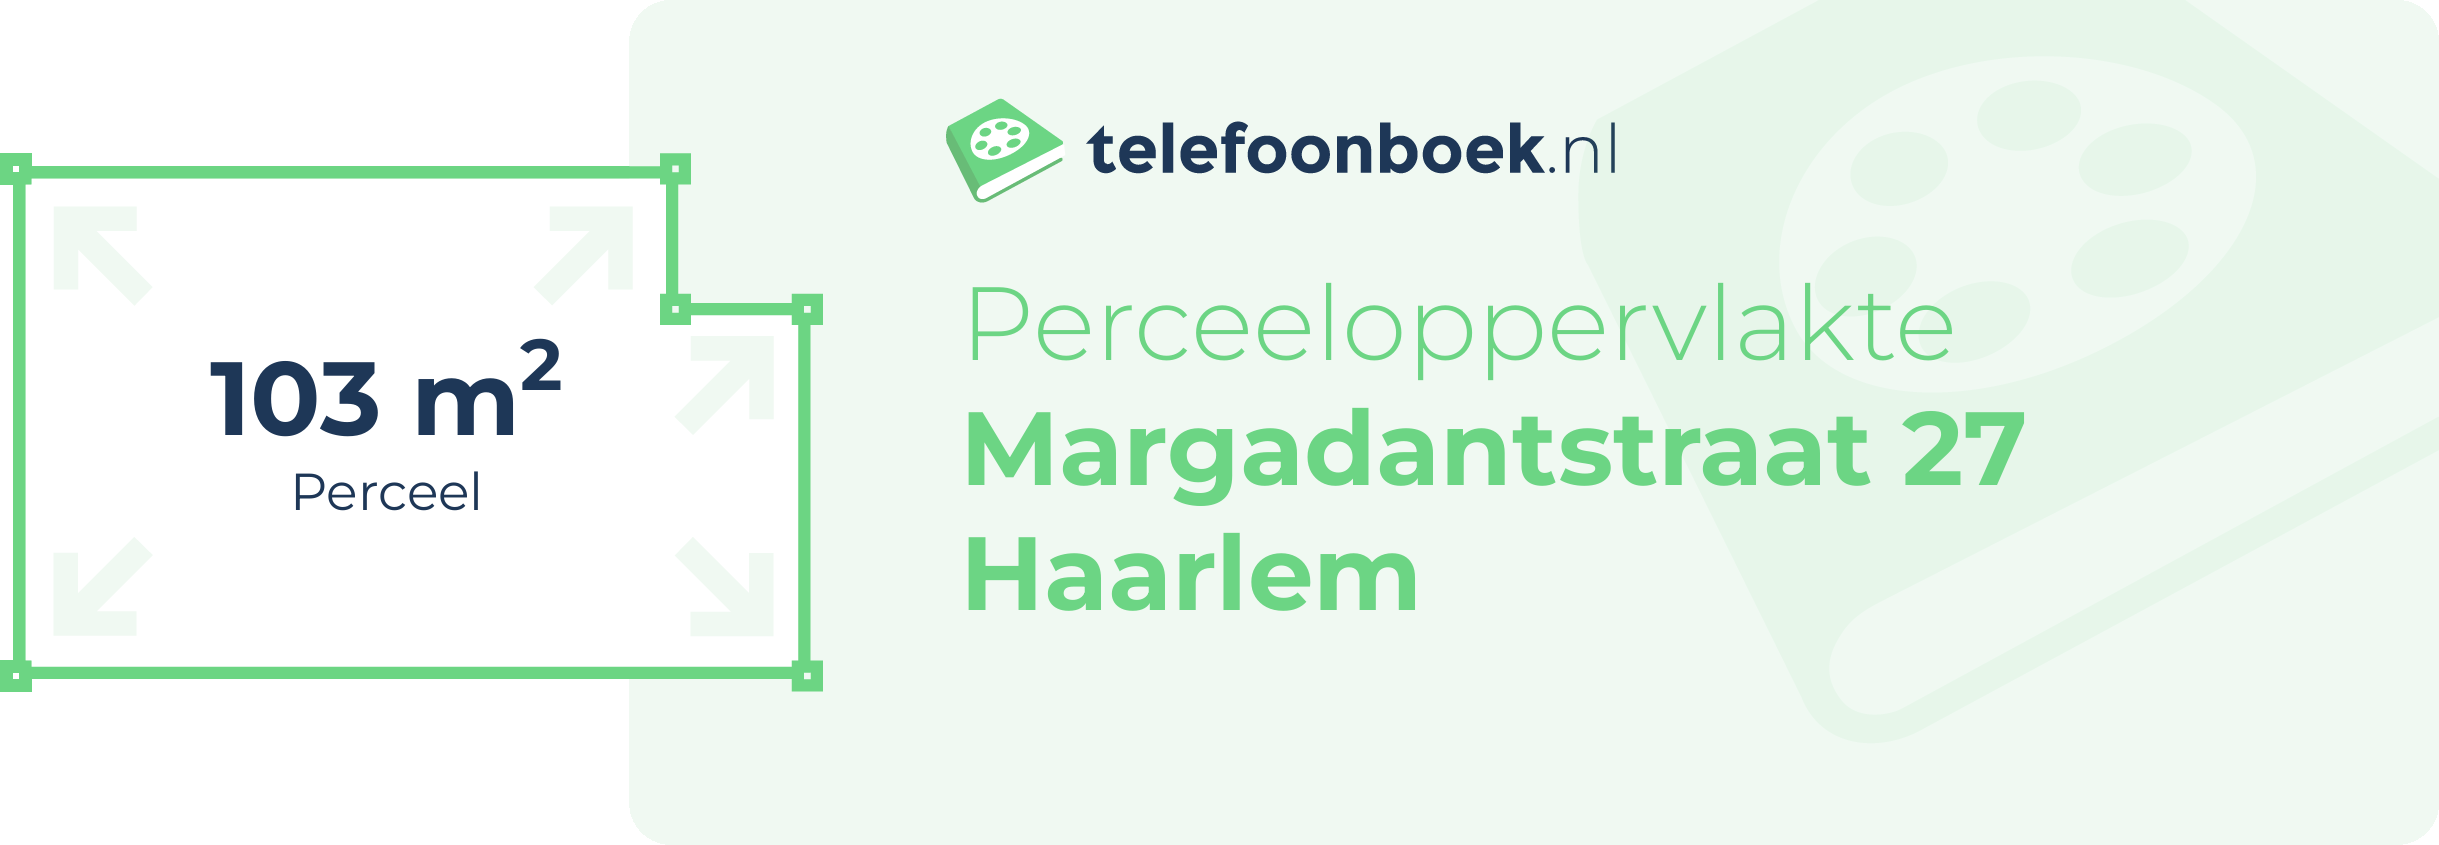 Perceeloppervlakte Margadantstraat 27 Haarlem